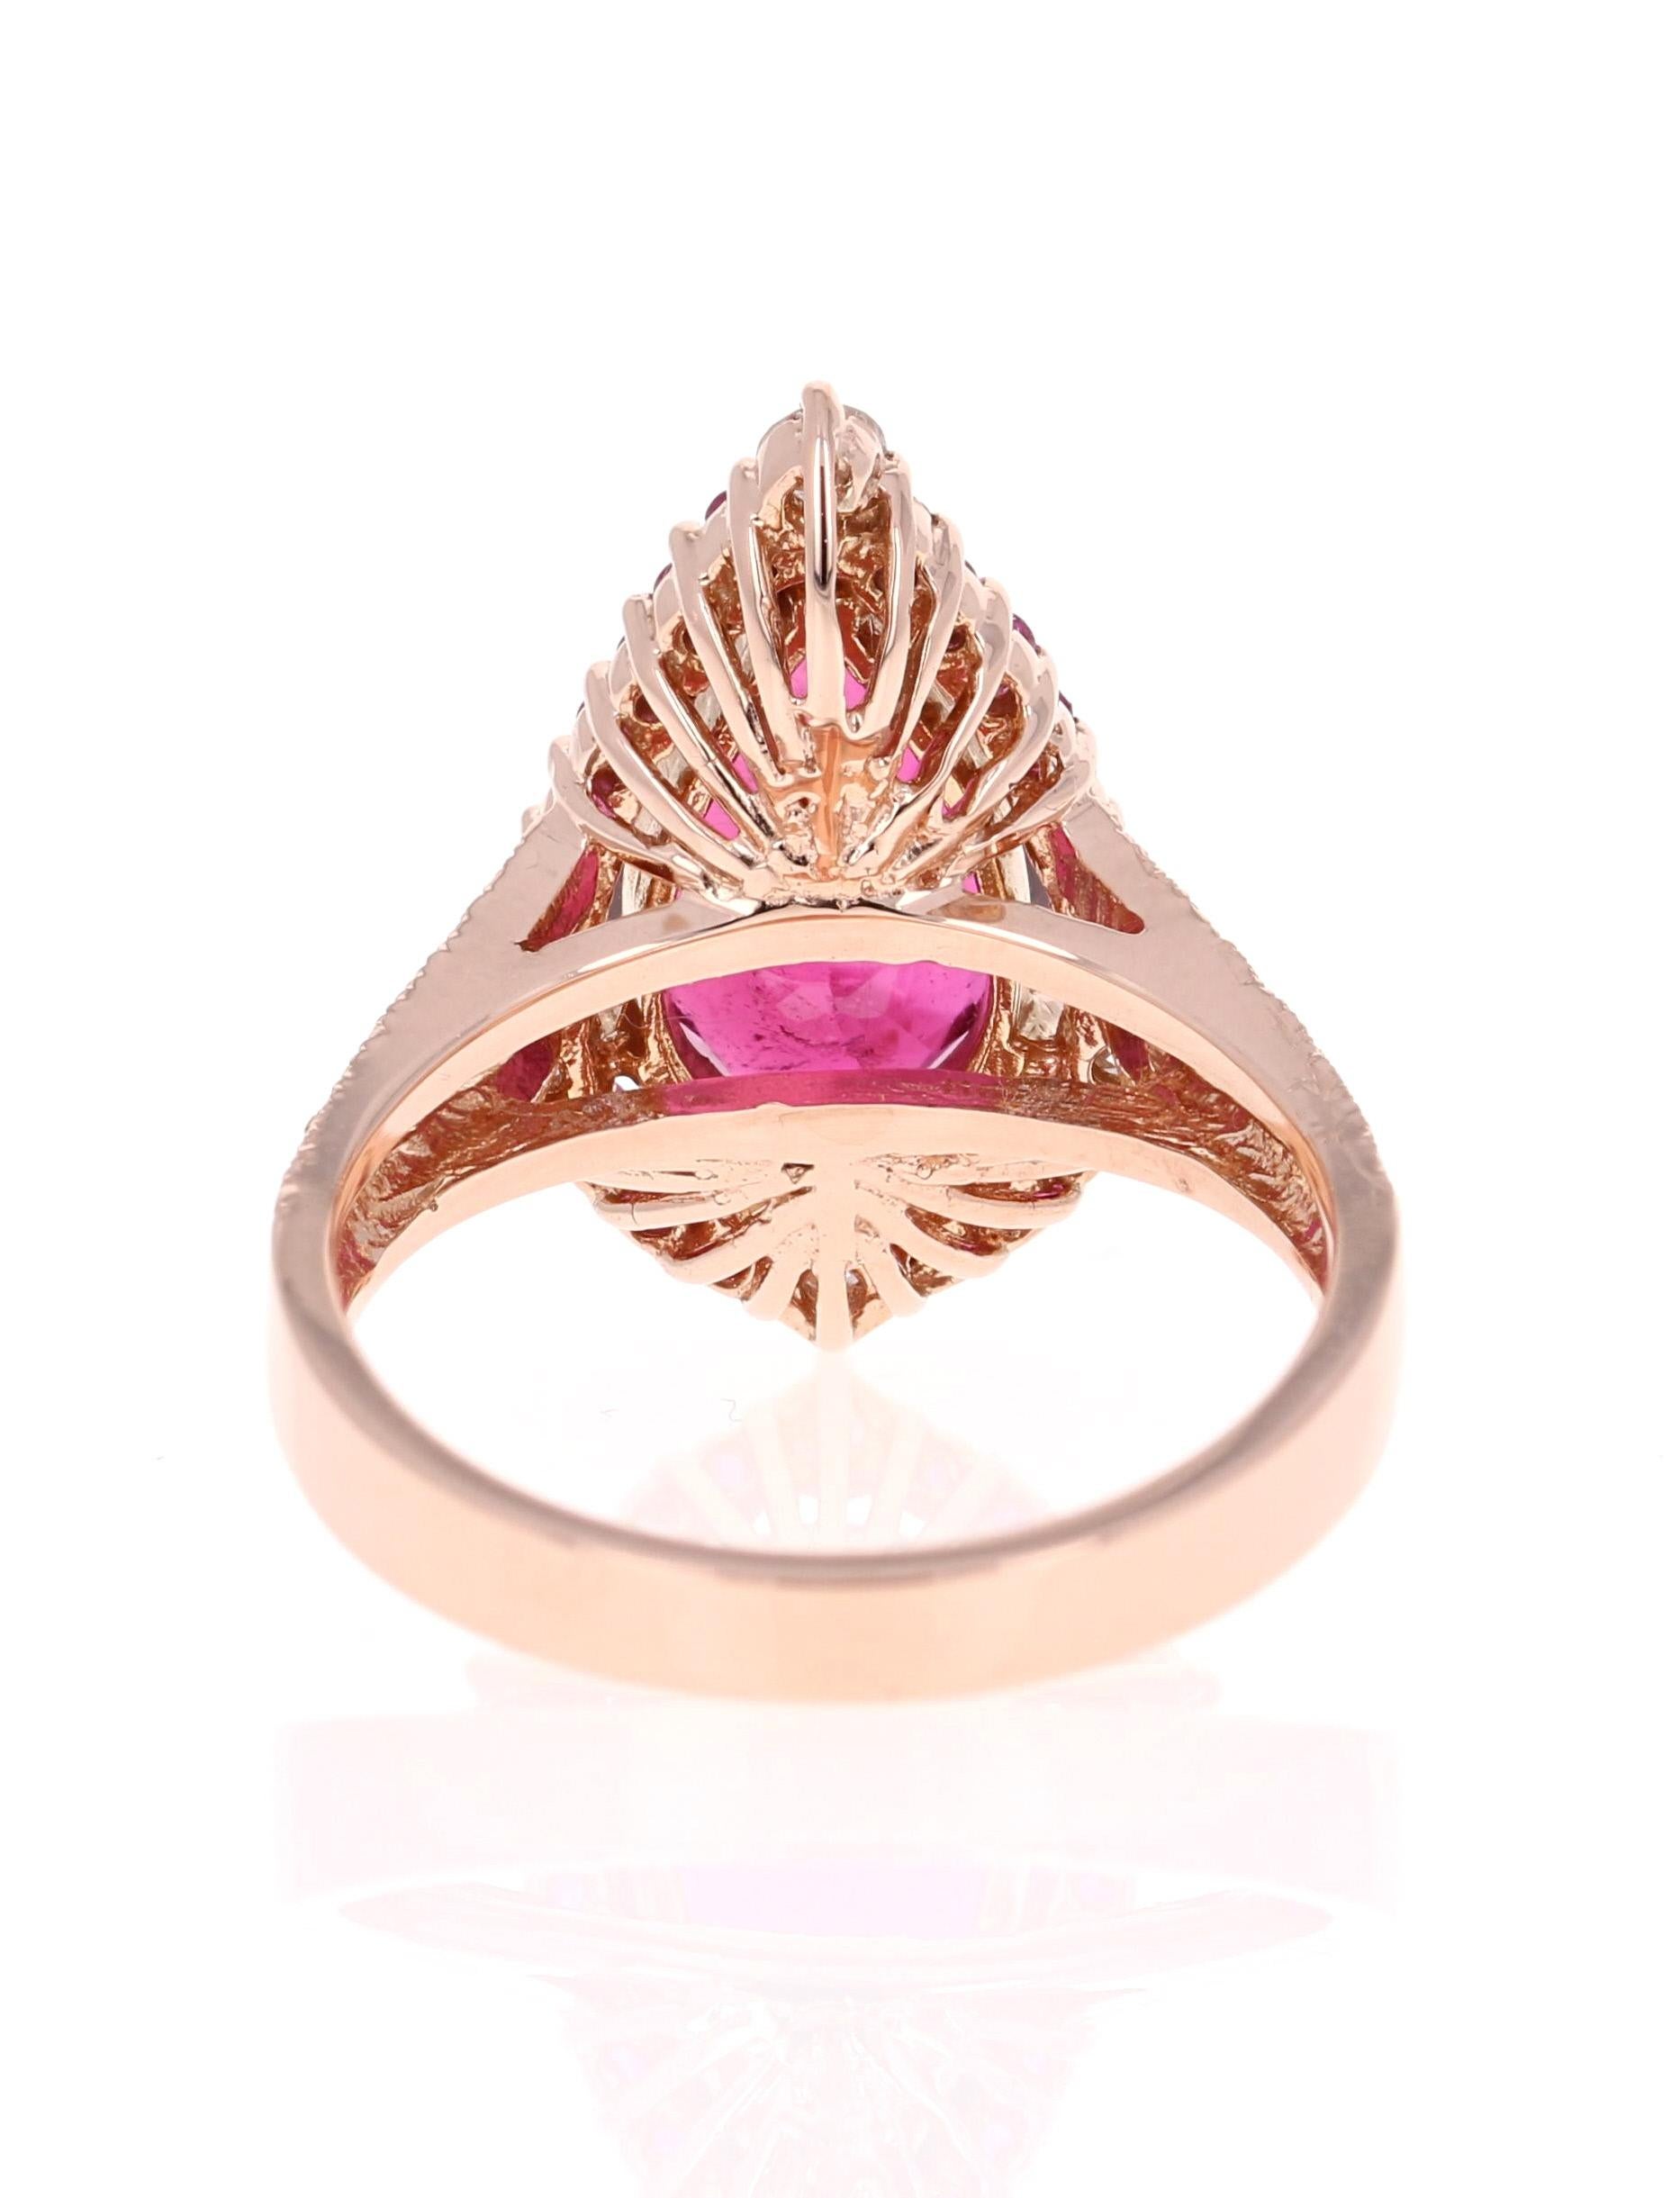 Pear Cut 4.06 Carat Tourmaline Pink Sapphire Diamond 14 Karat Rose Gold Ring